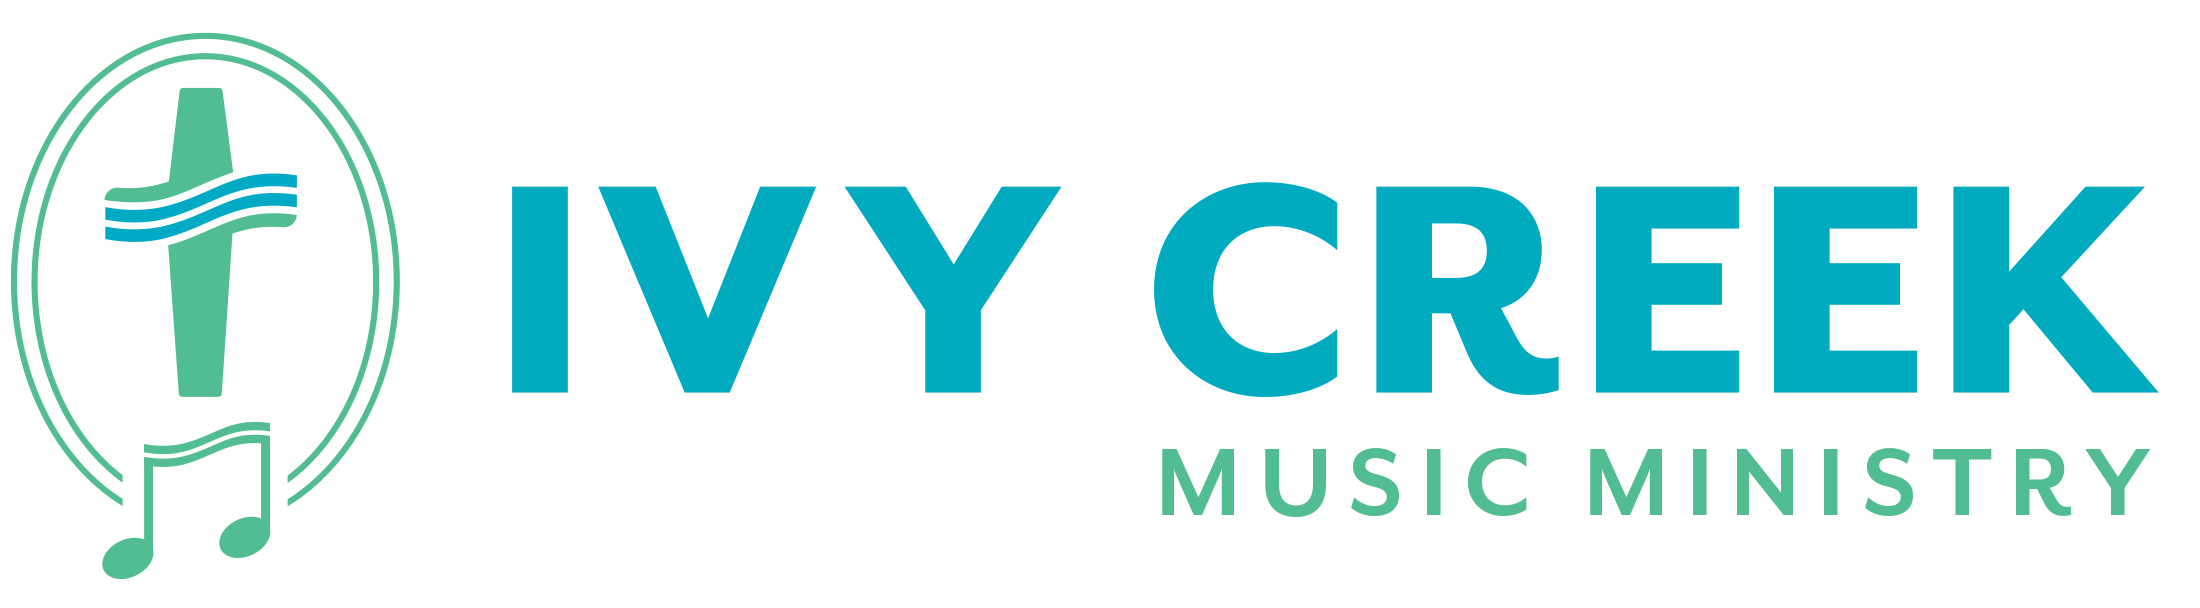 Ivy Creek Baptist Church Music Ministry